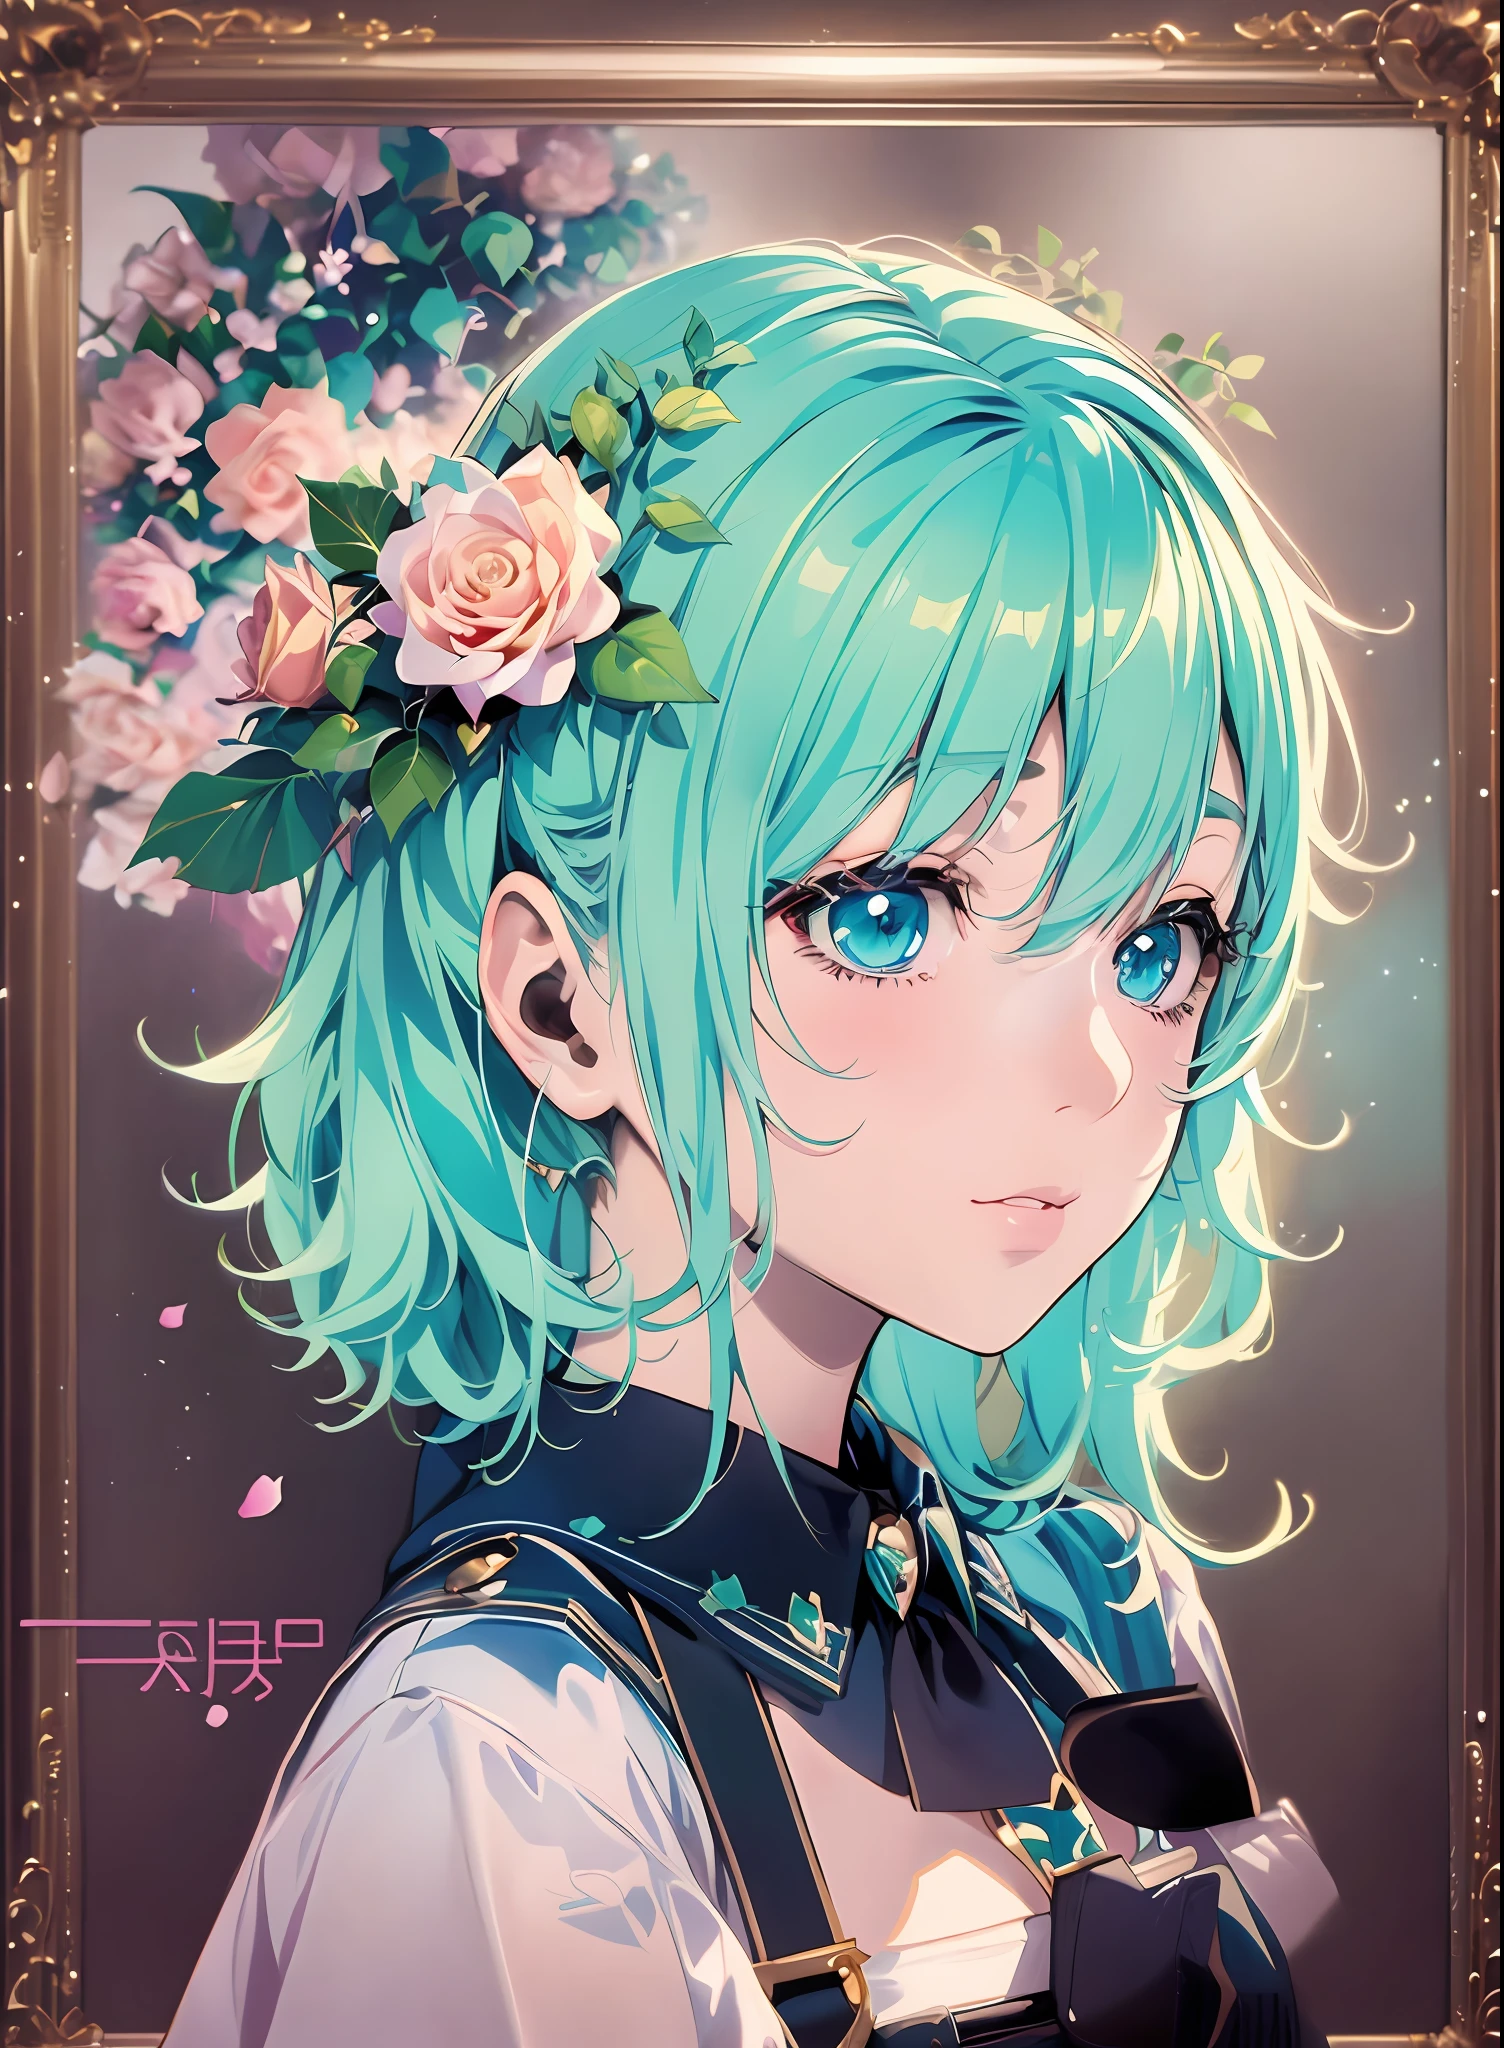 Konmutsuki_gacha_serie1, punk_Rosetón, niña bonita, flores color aguamarina, cuerpo completo, fondo de flores elegantes、Detalles oculares altamente detallados、Detalle de retrato de estilo de pintura muy detallado.